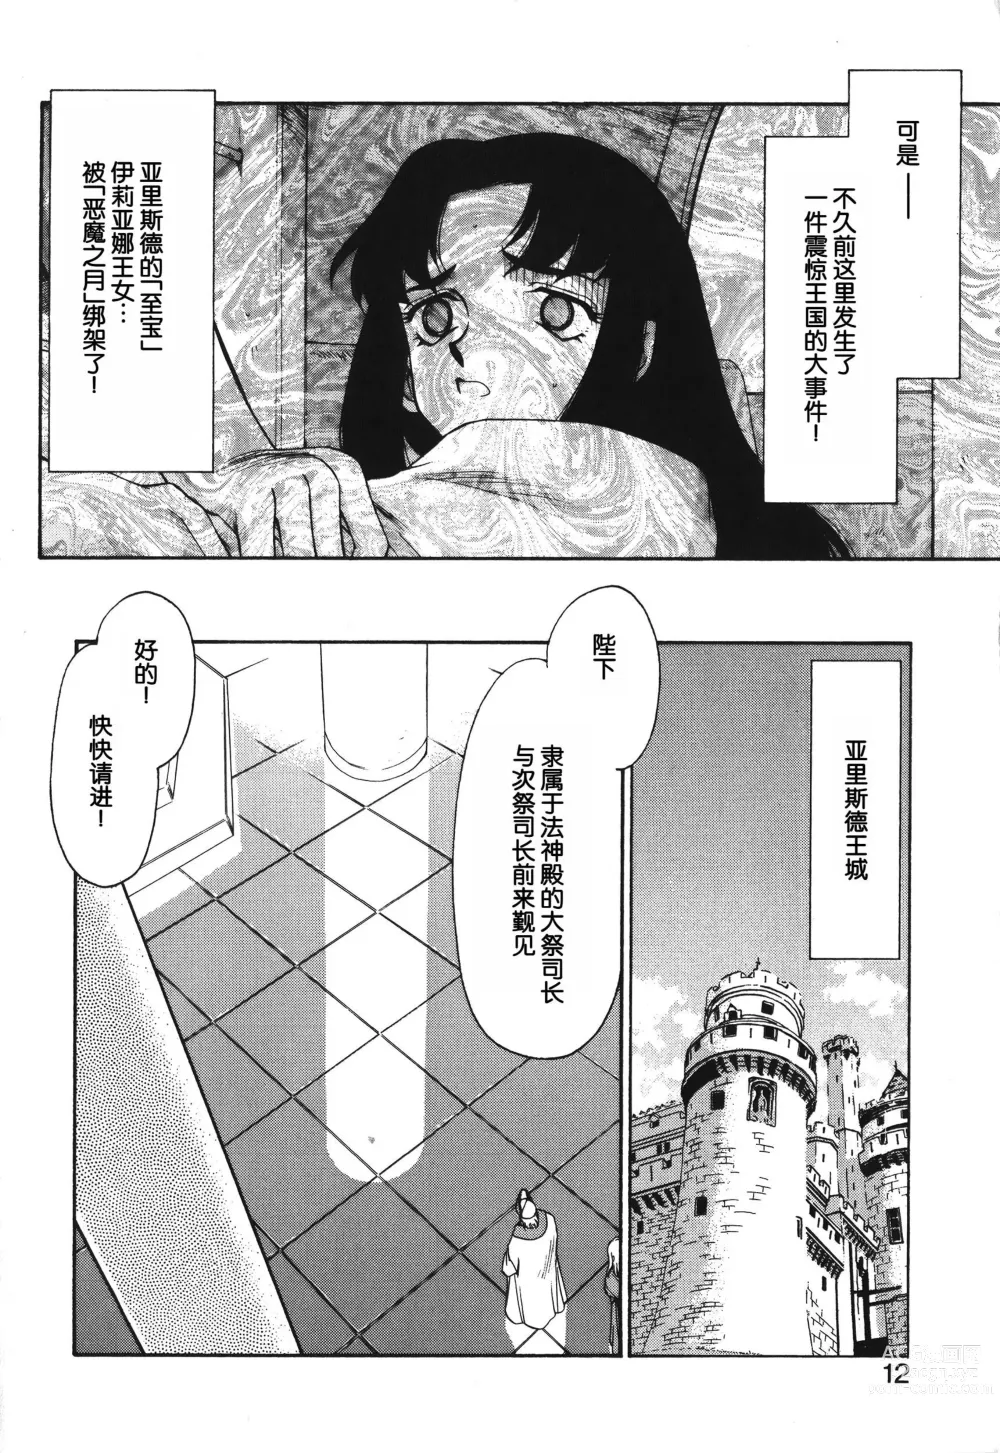 Page 12 of manga Bad Moon...